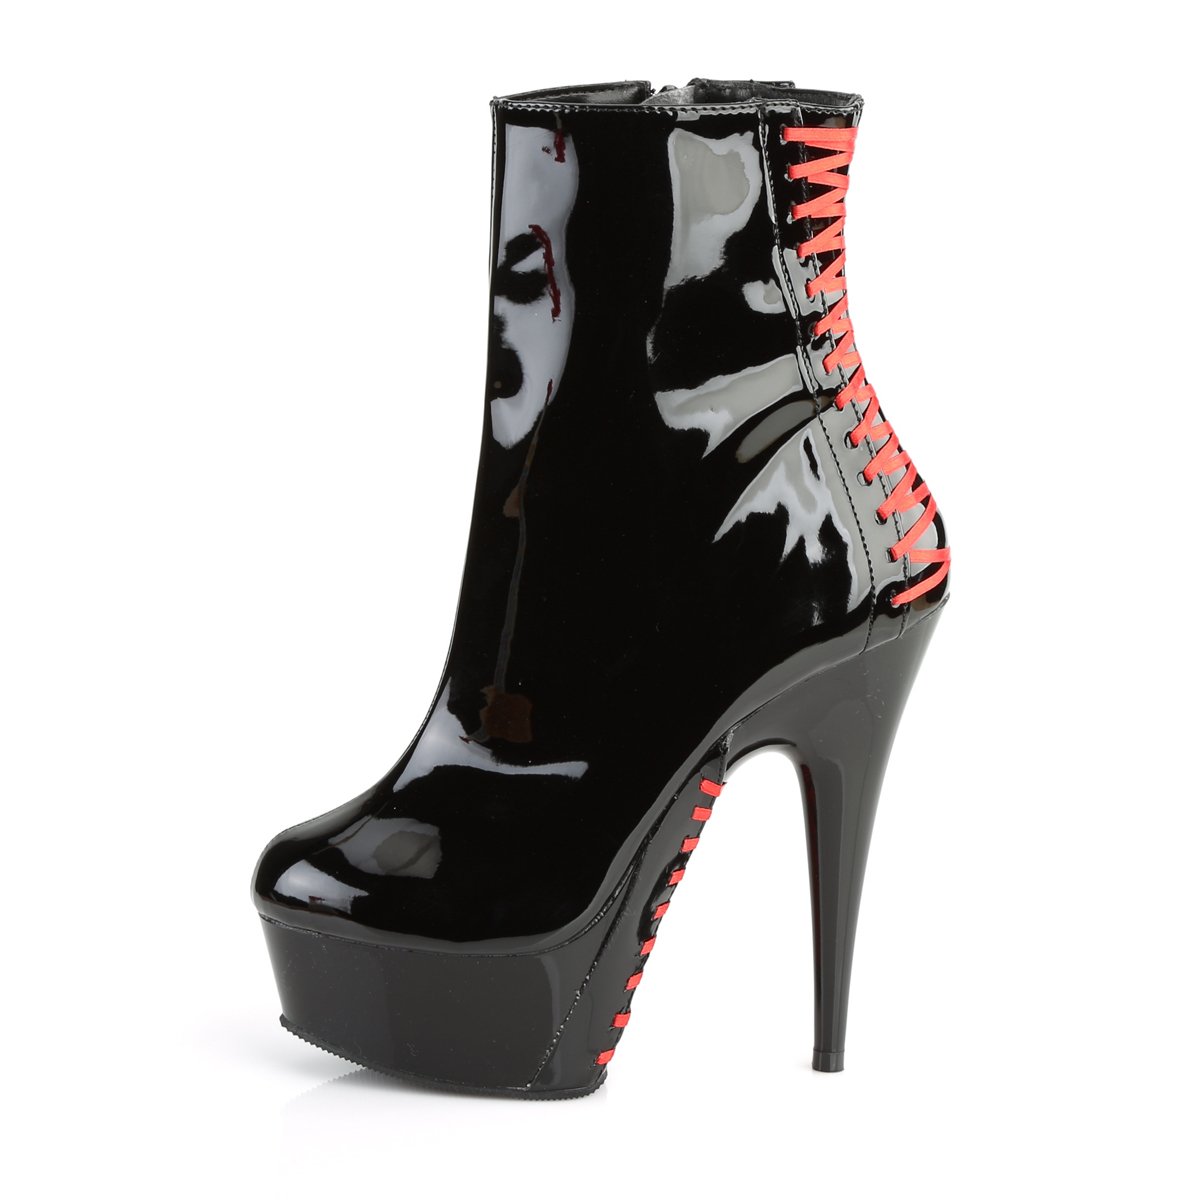 DELIGHT-1010 Pleaser High Heels Platform Ankle Boot black patent corset ...